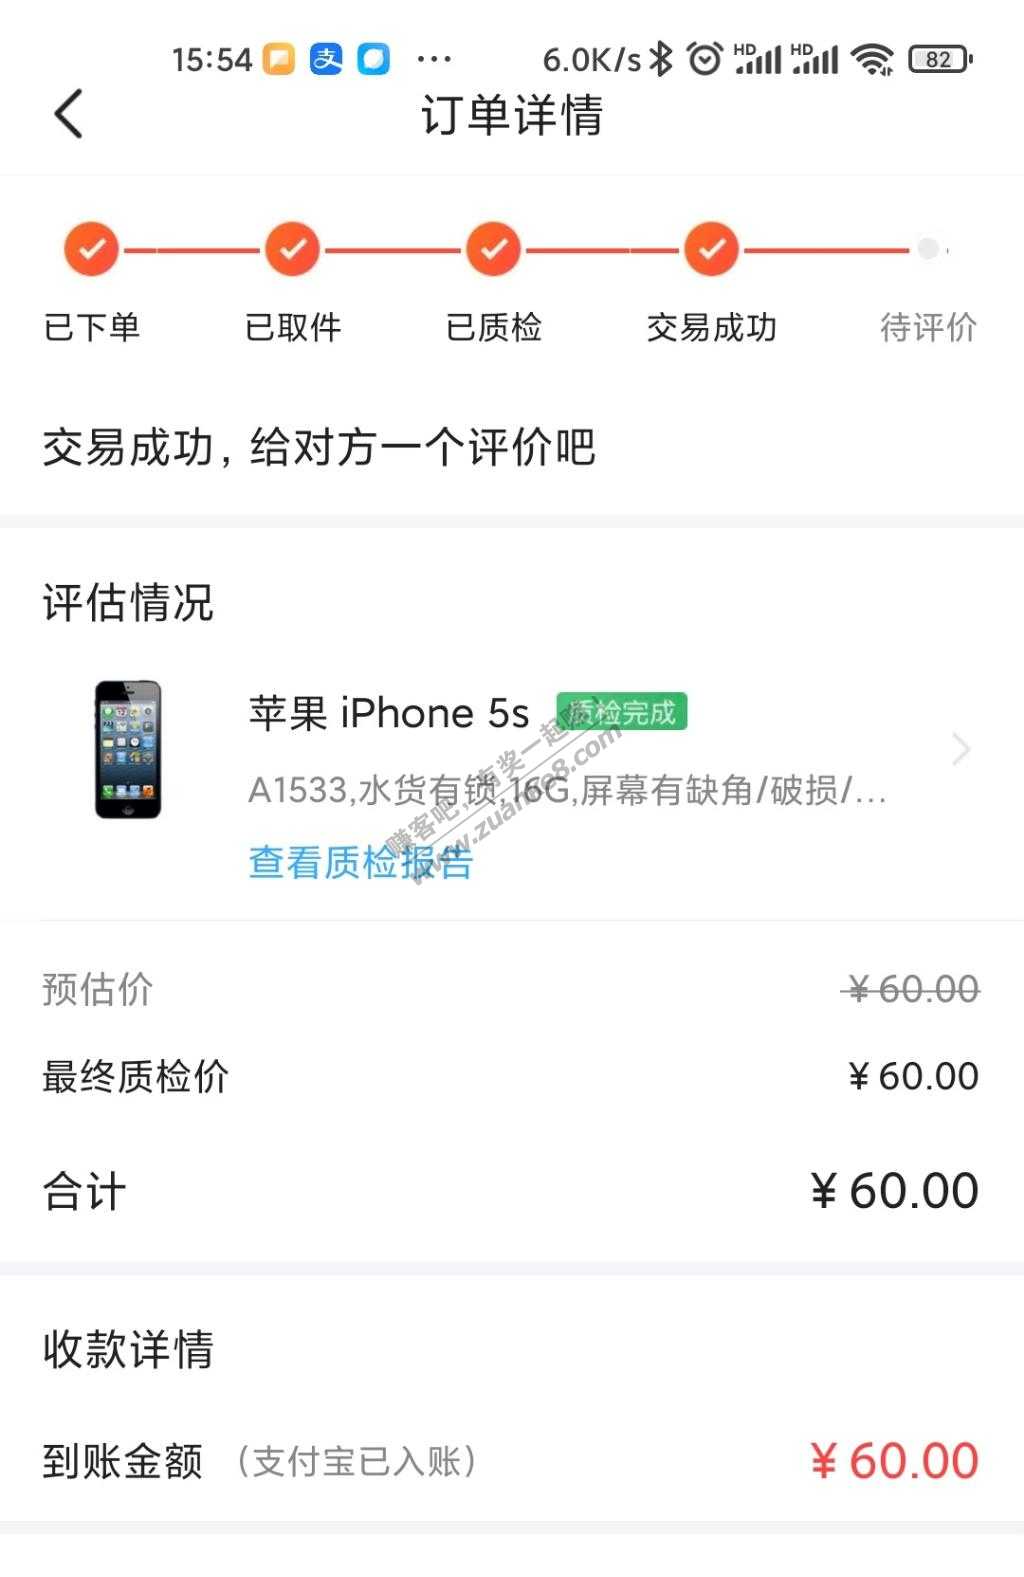 iphone古老型号尸体机都能回收60元-惠小助(52huixz.com)